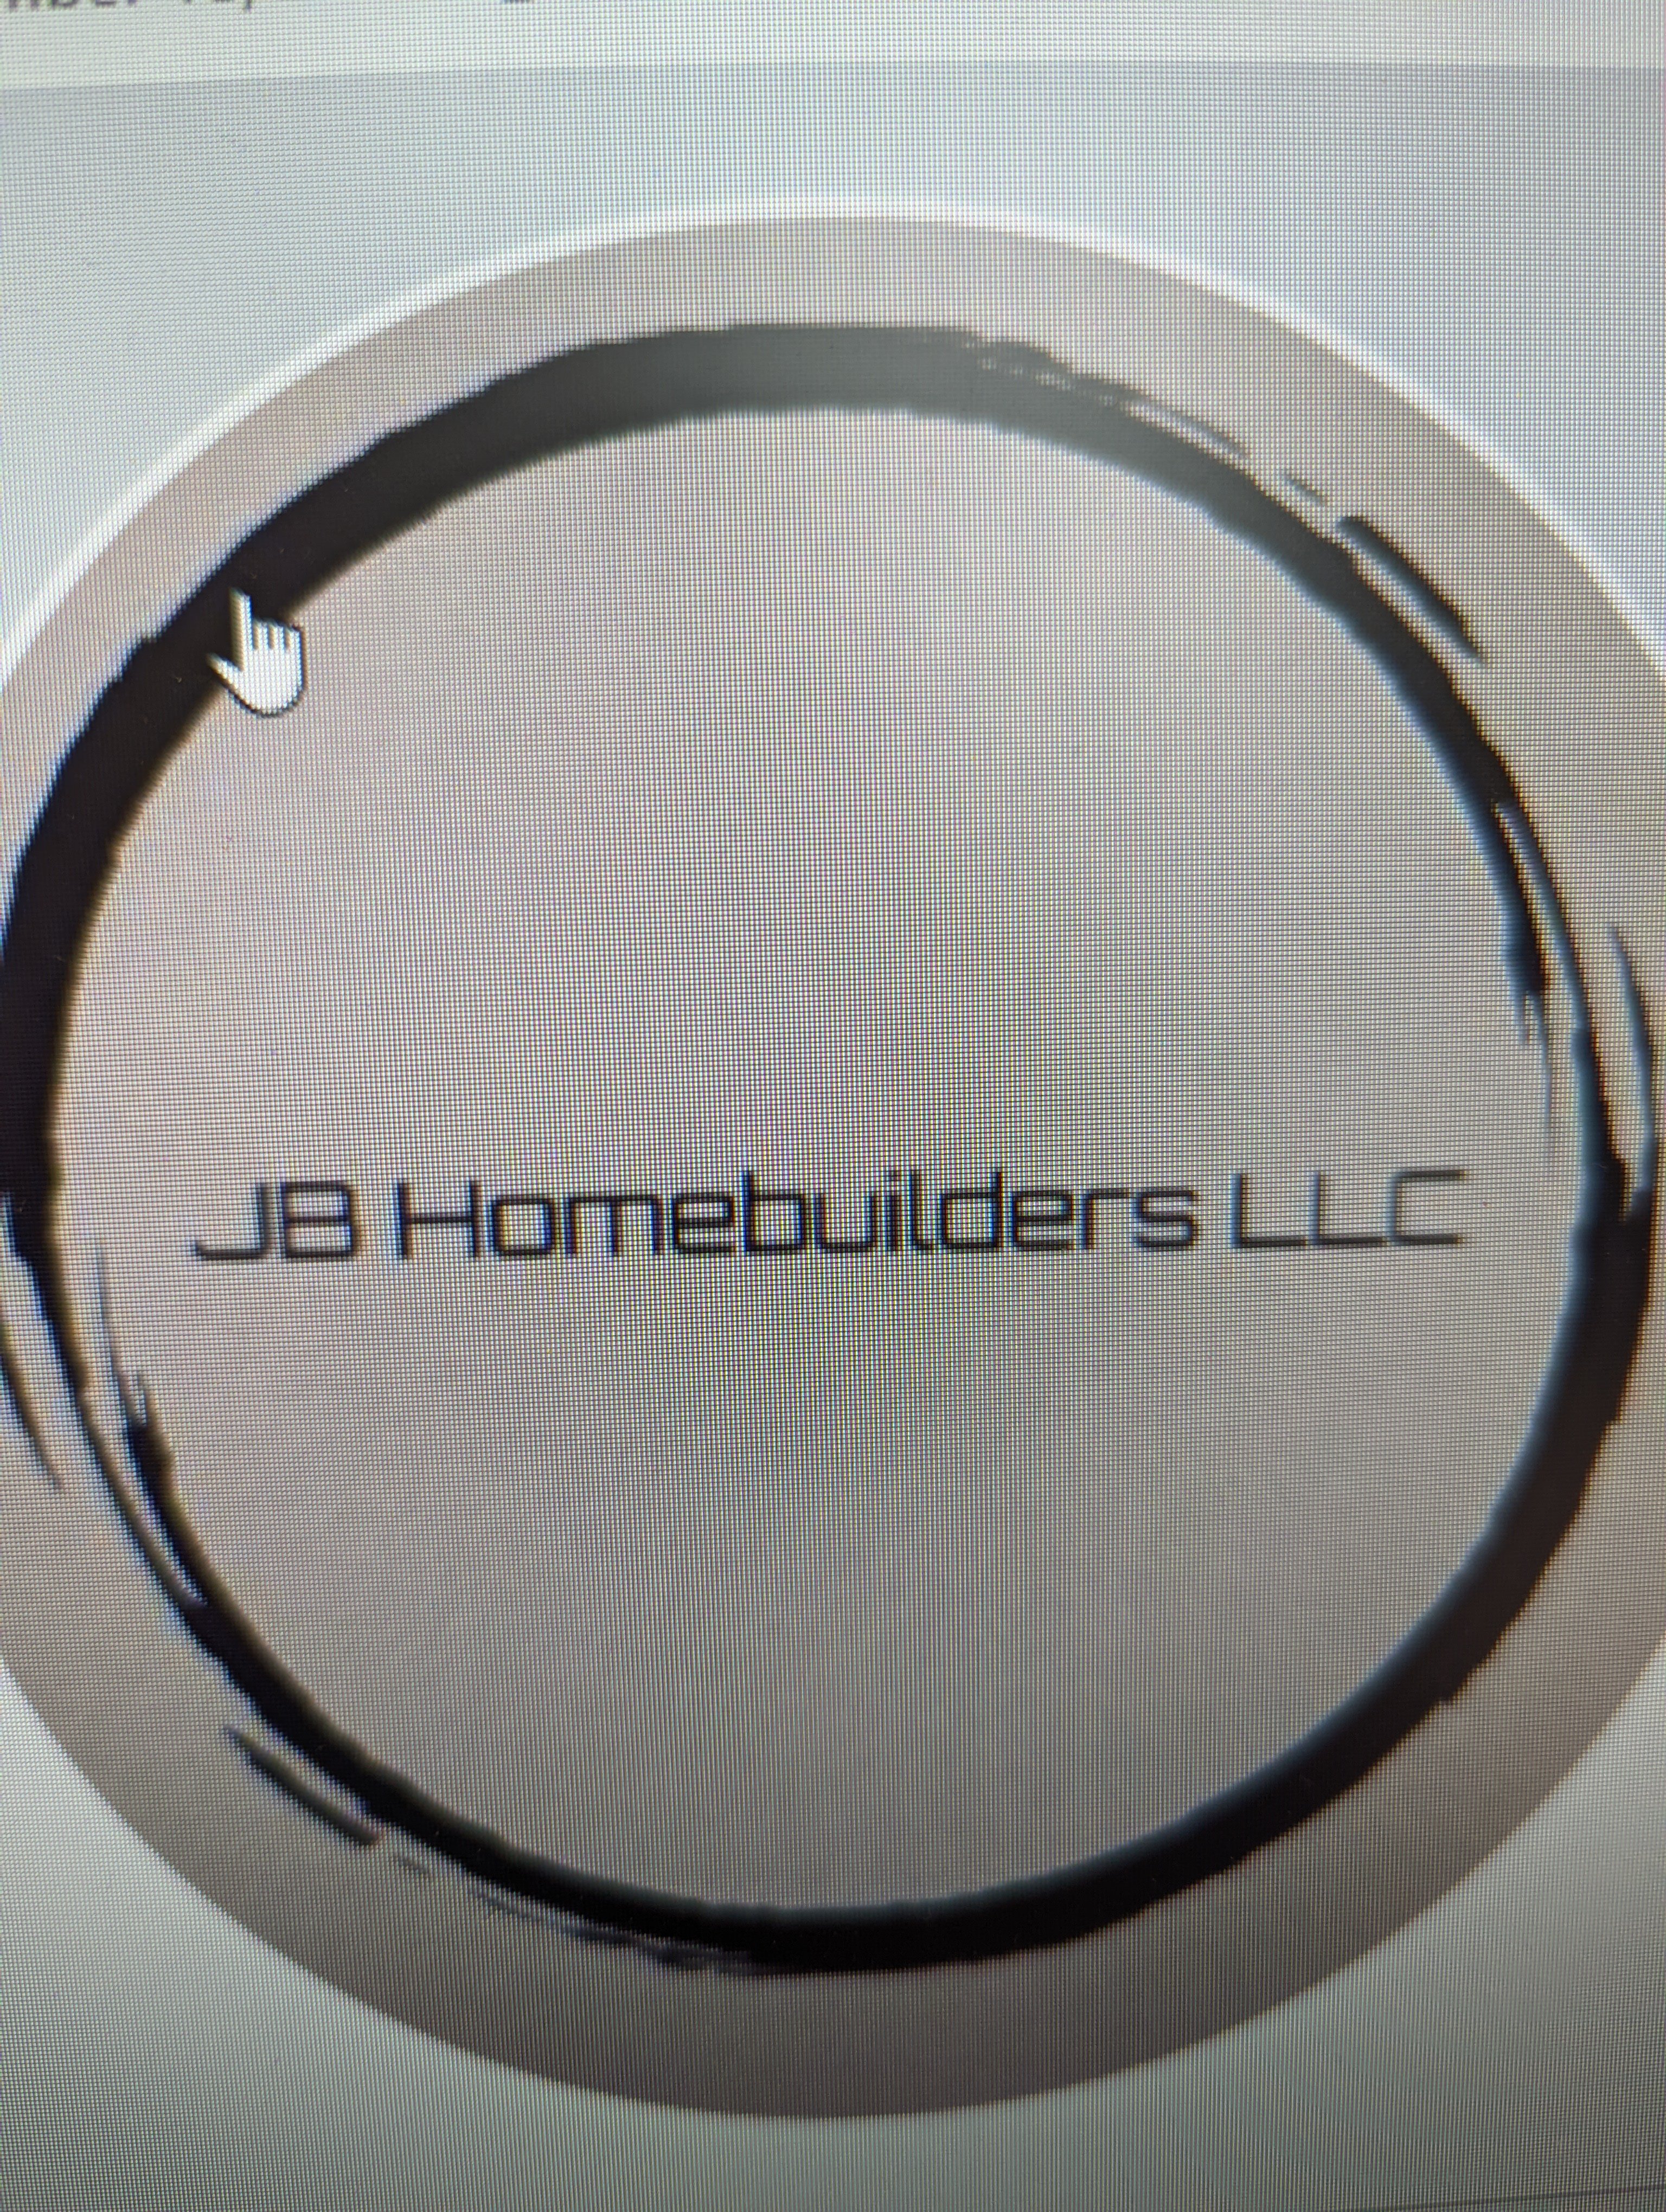 JB Home Builders Logo